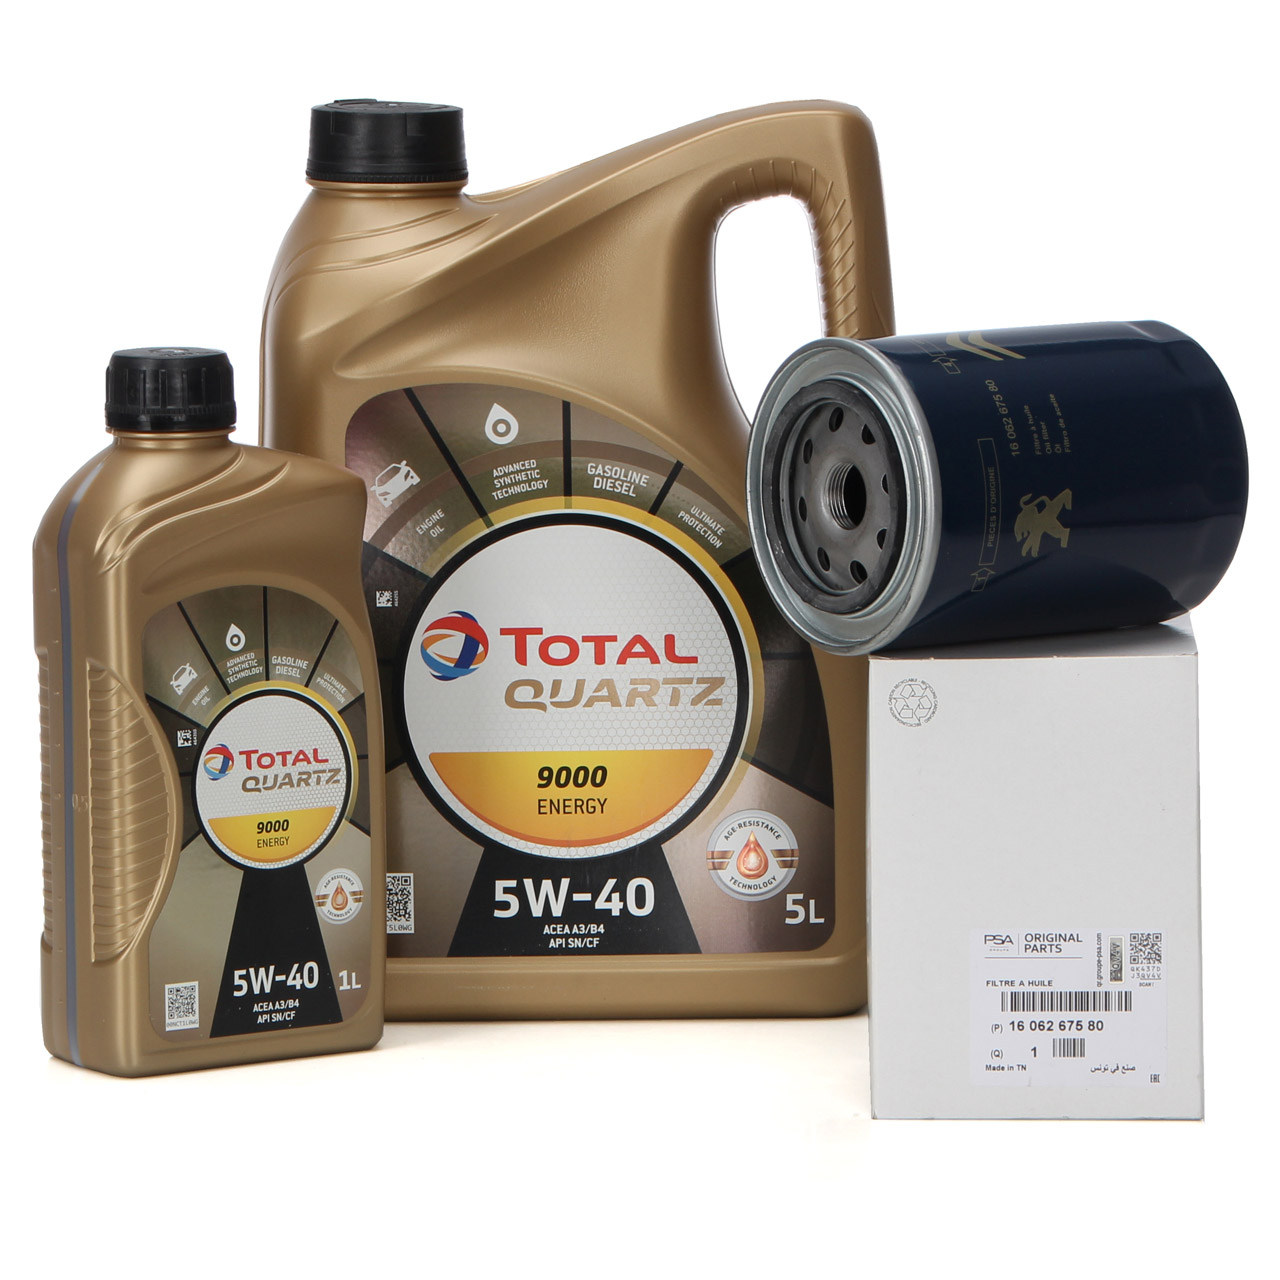 Total QUARTZ 9000 ENERGY 5W-40 Motor Oil 1 Liter Can best price